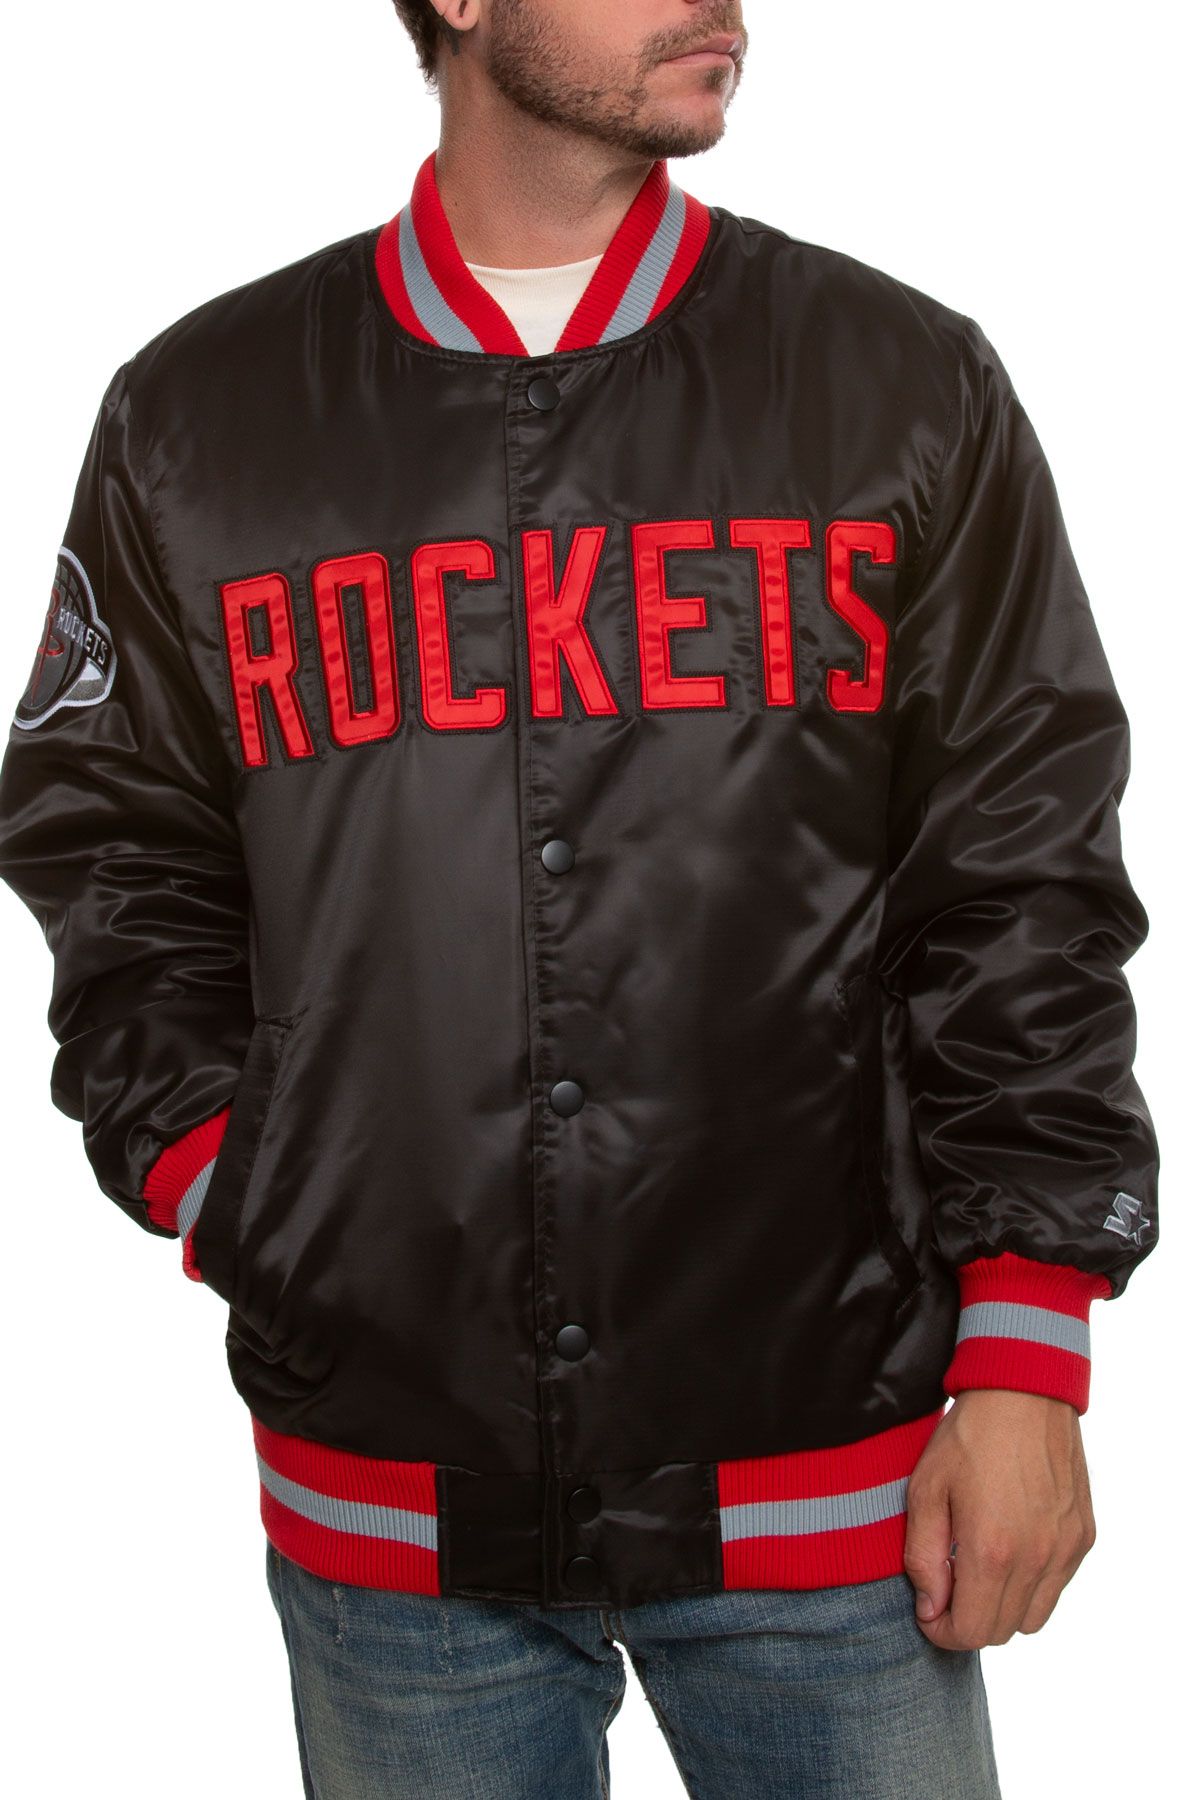 rockets jacket